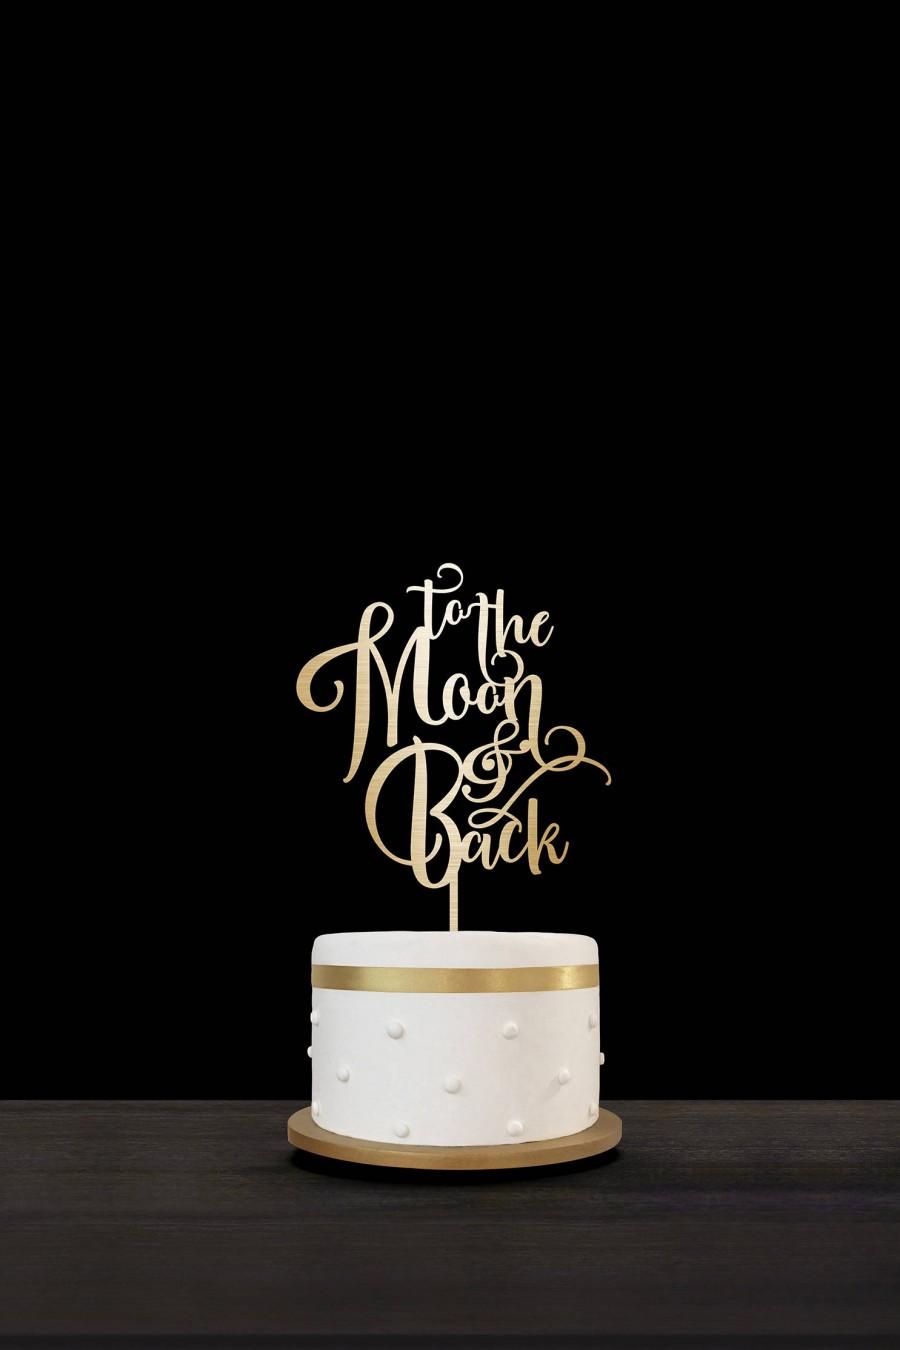 Свадьба - Customized Wedding Cake Topper Personalized Cake Topper for Wedding Custom Personalized Wedding Cake Topper To The Moon And Back Cake Topper